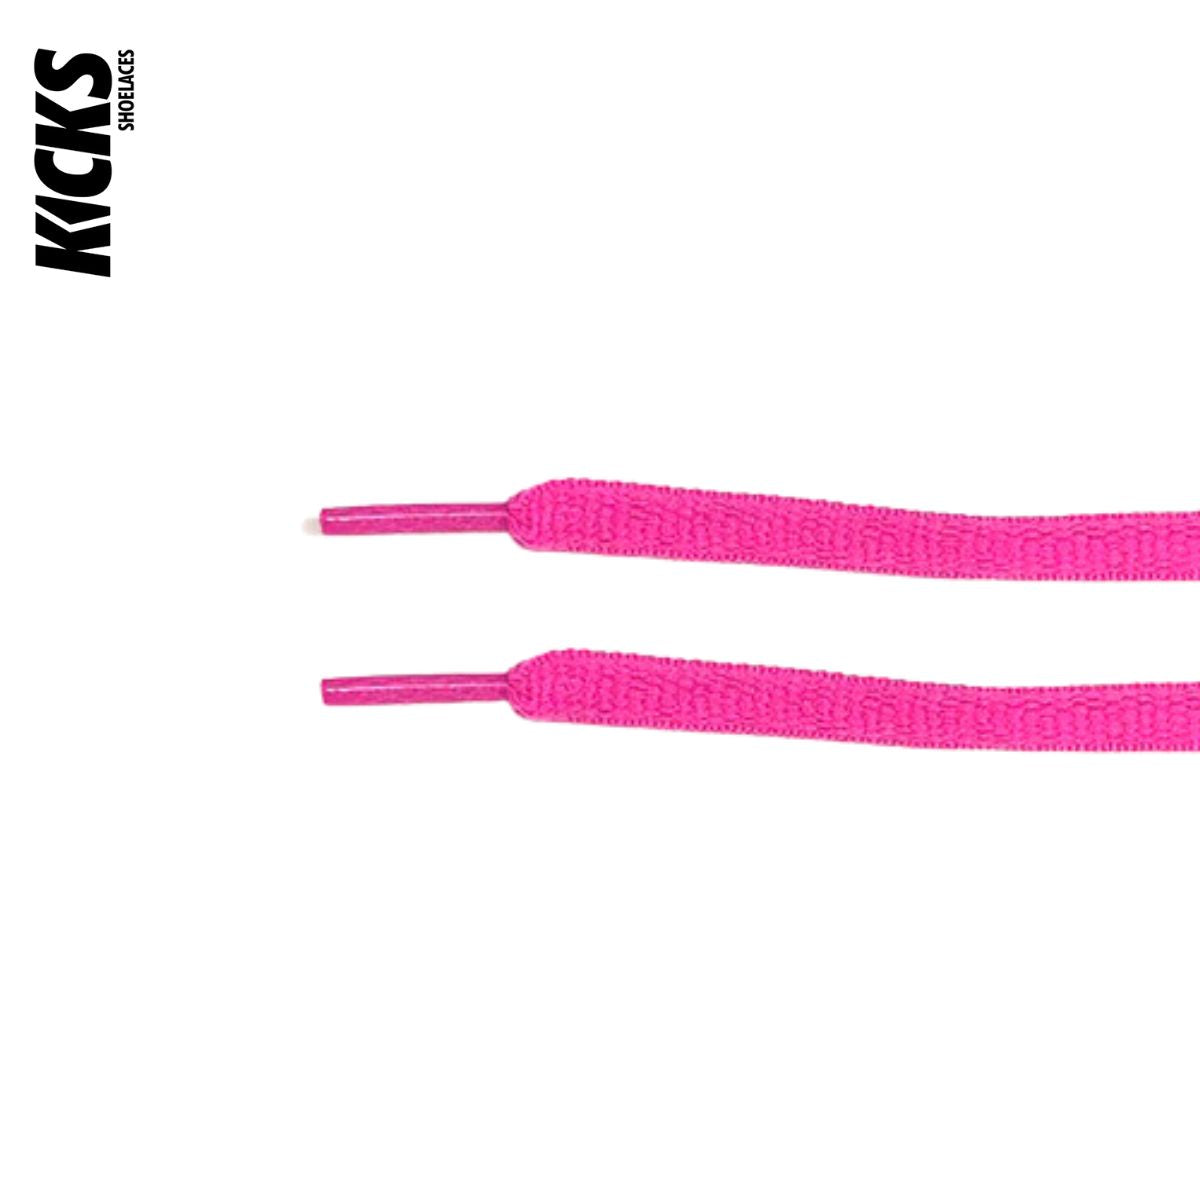 Oval Shoelaces - Kicks Shoelaces